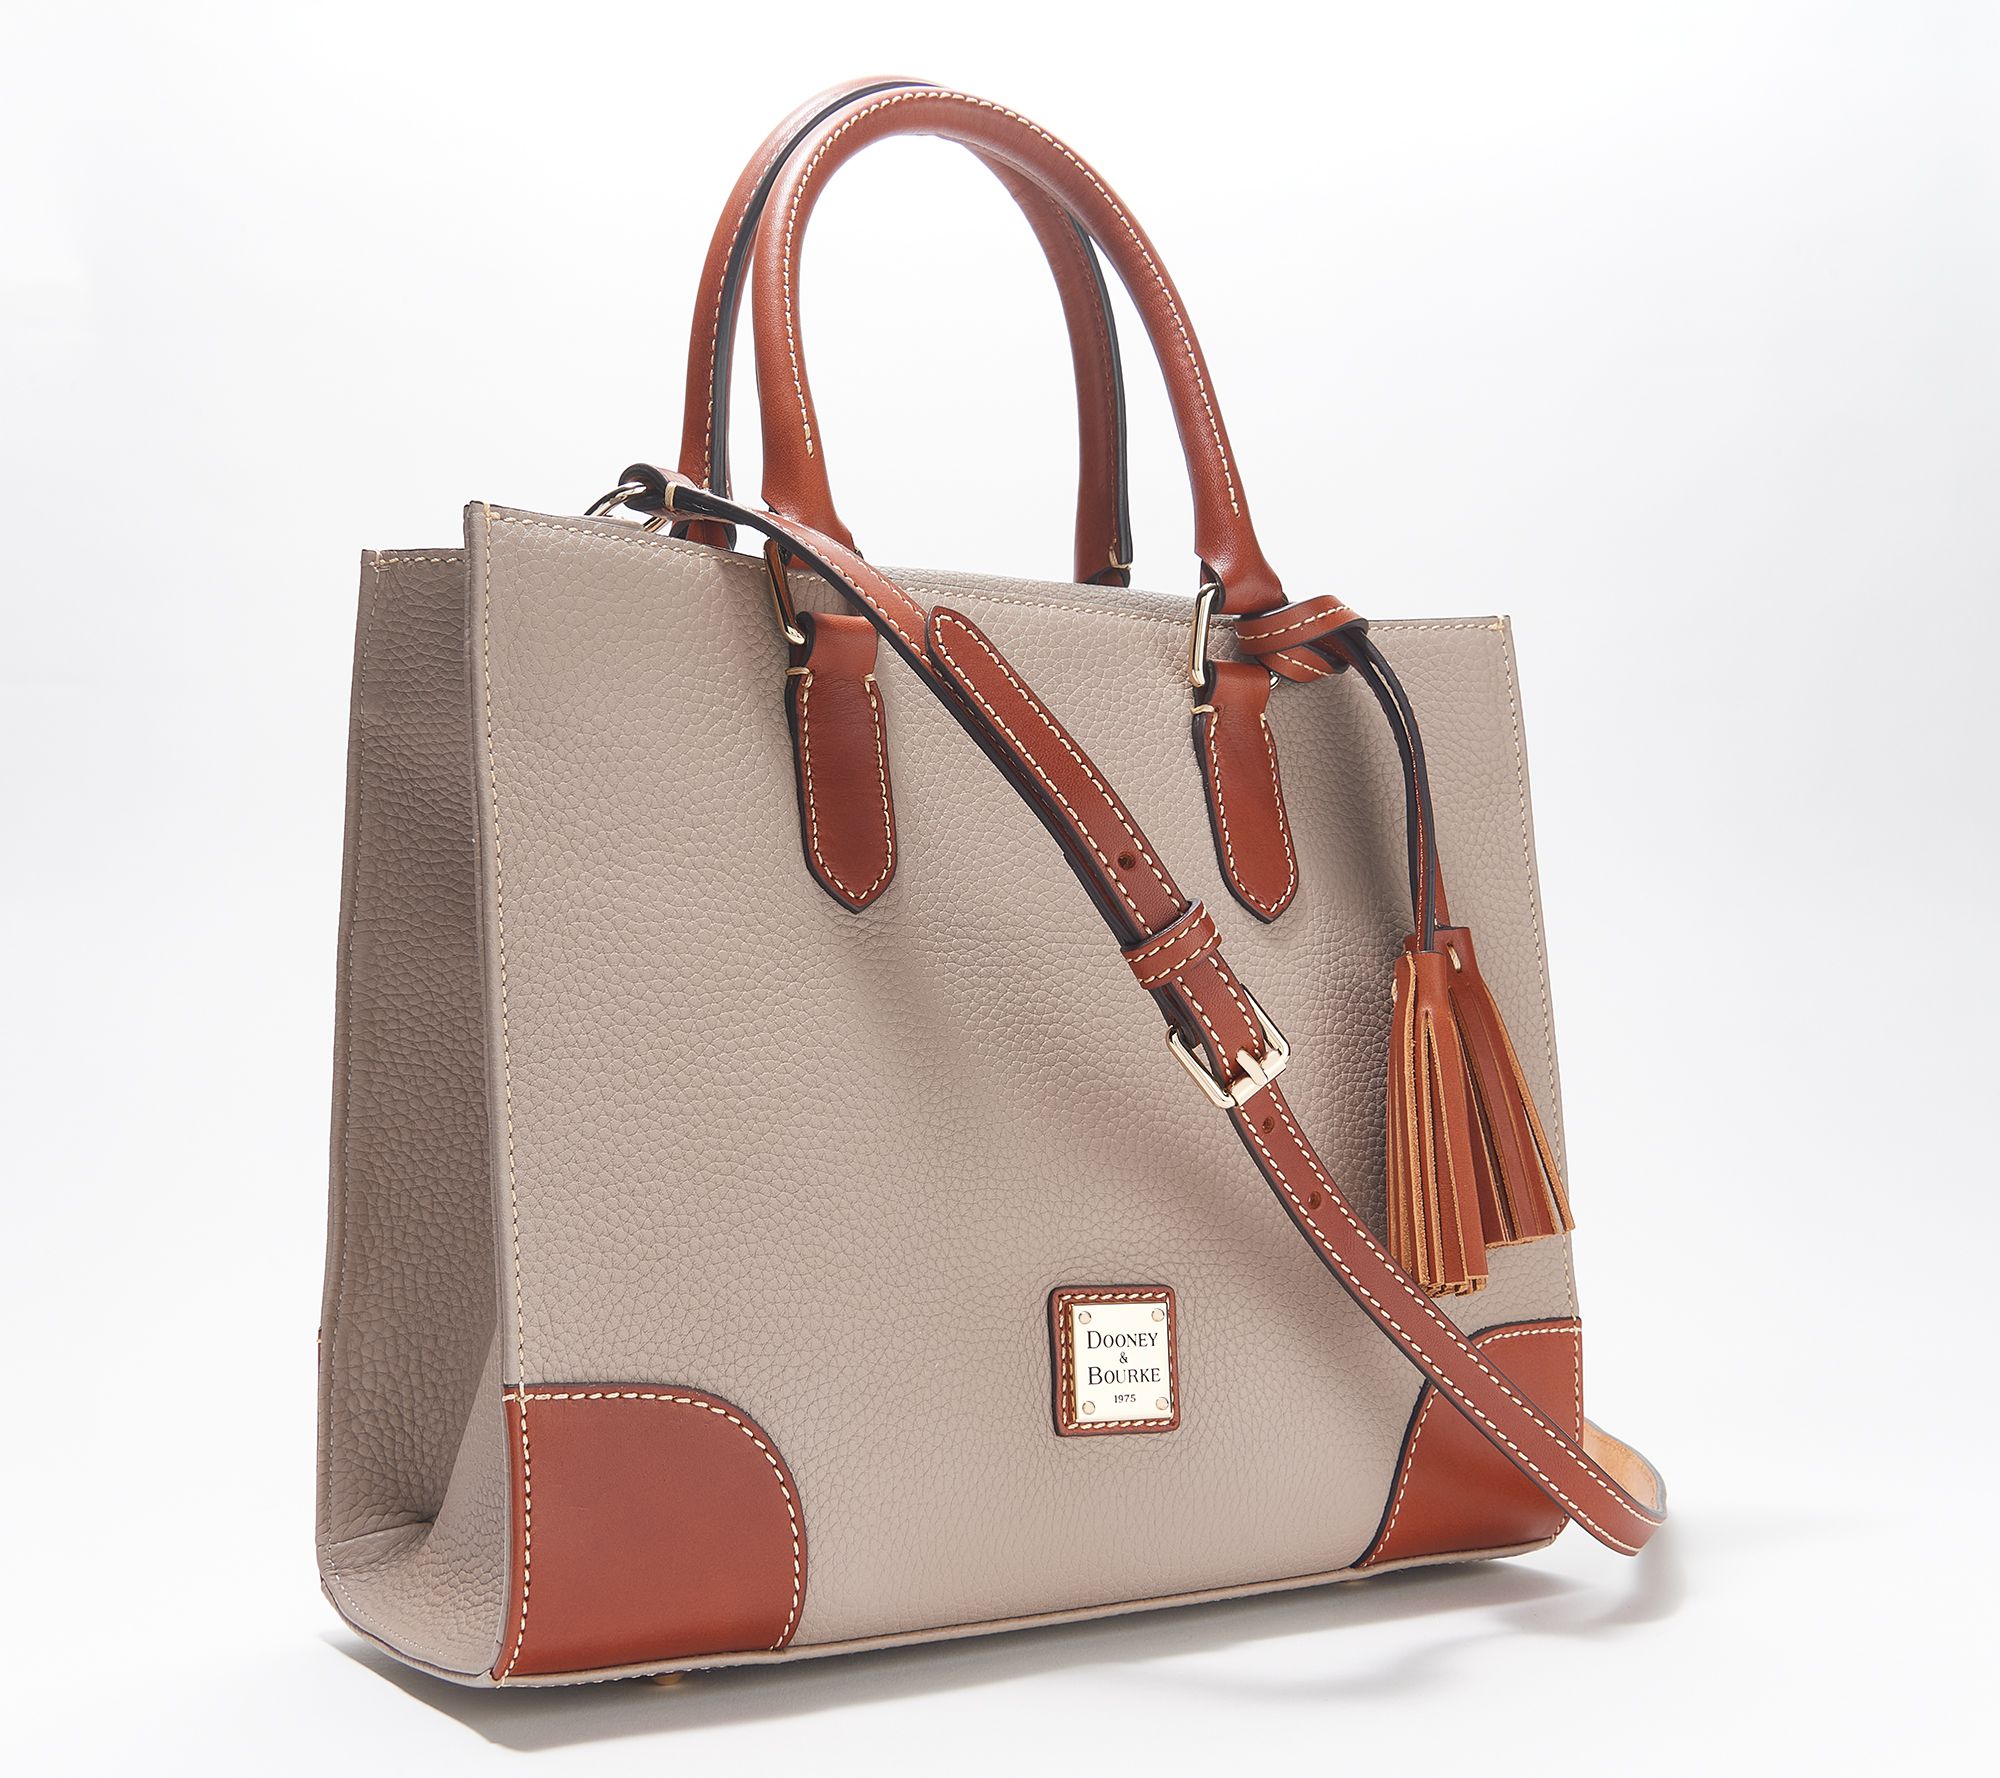 Colorful Dooney & Bourke handbag, Discontinued Style!